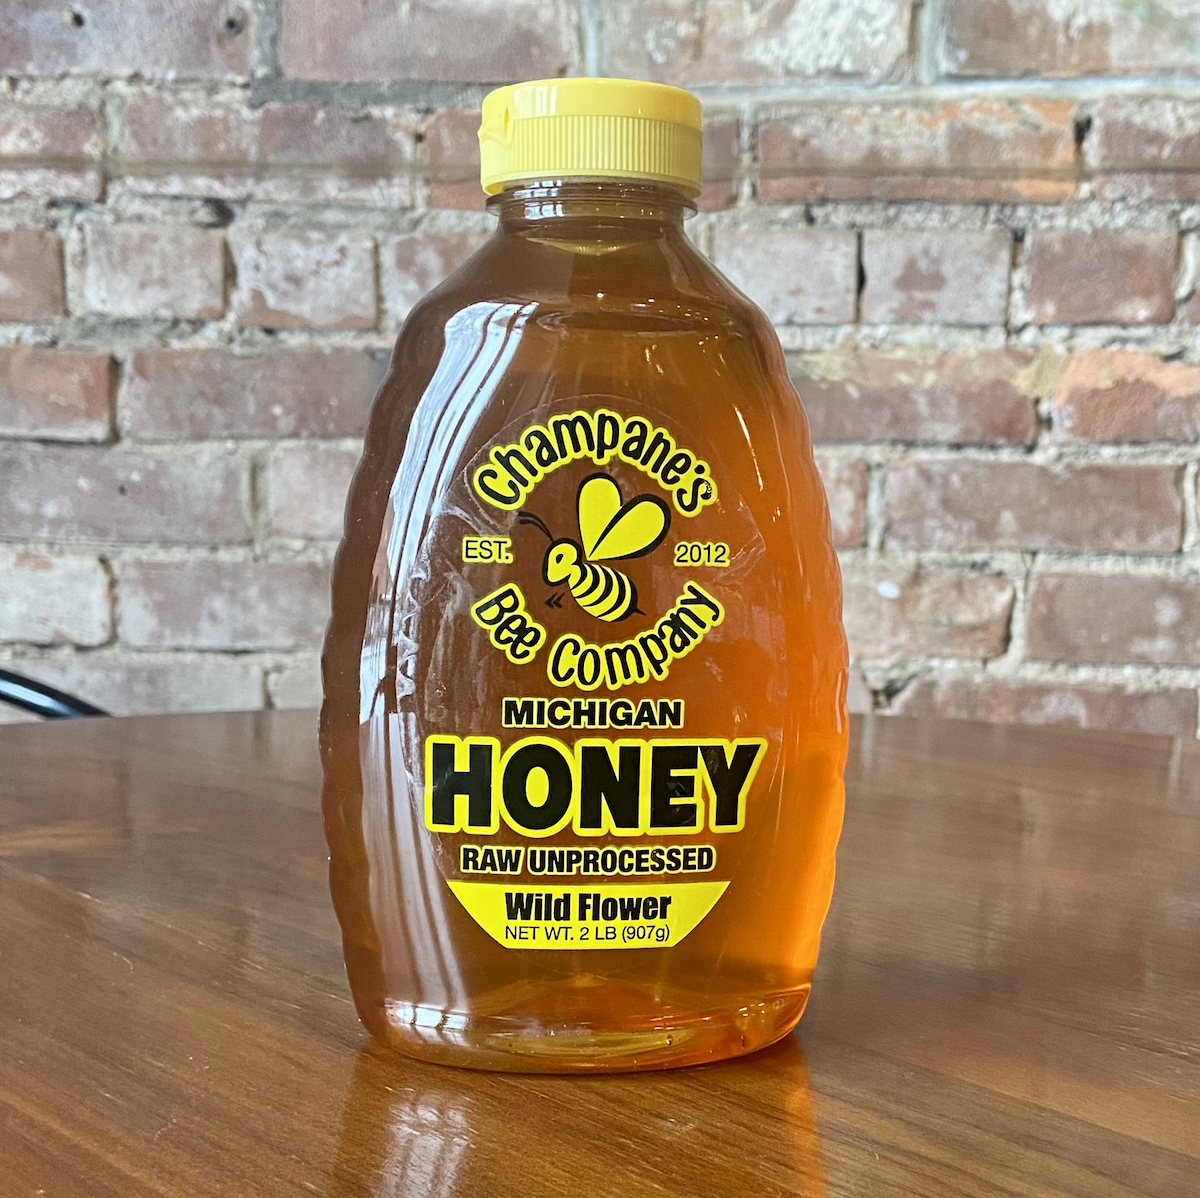 Picture Champane's Bee Company Michigan Wild Flower Honey 2lb